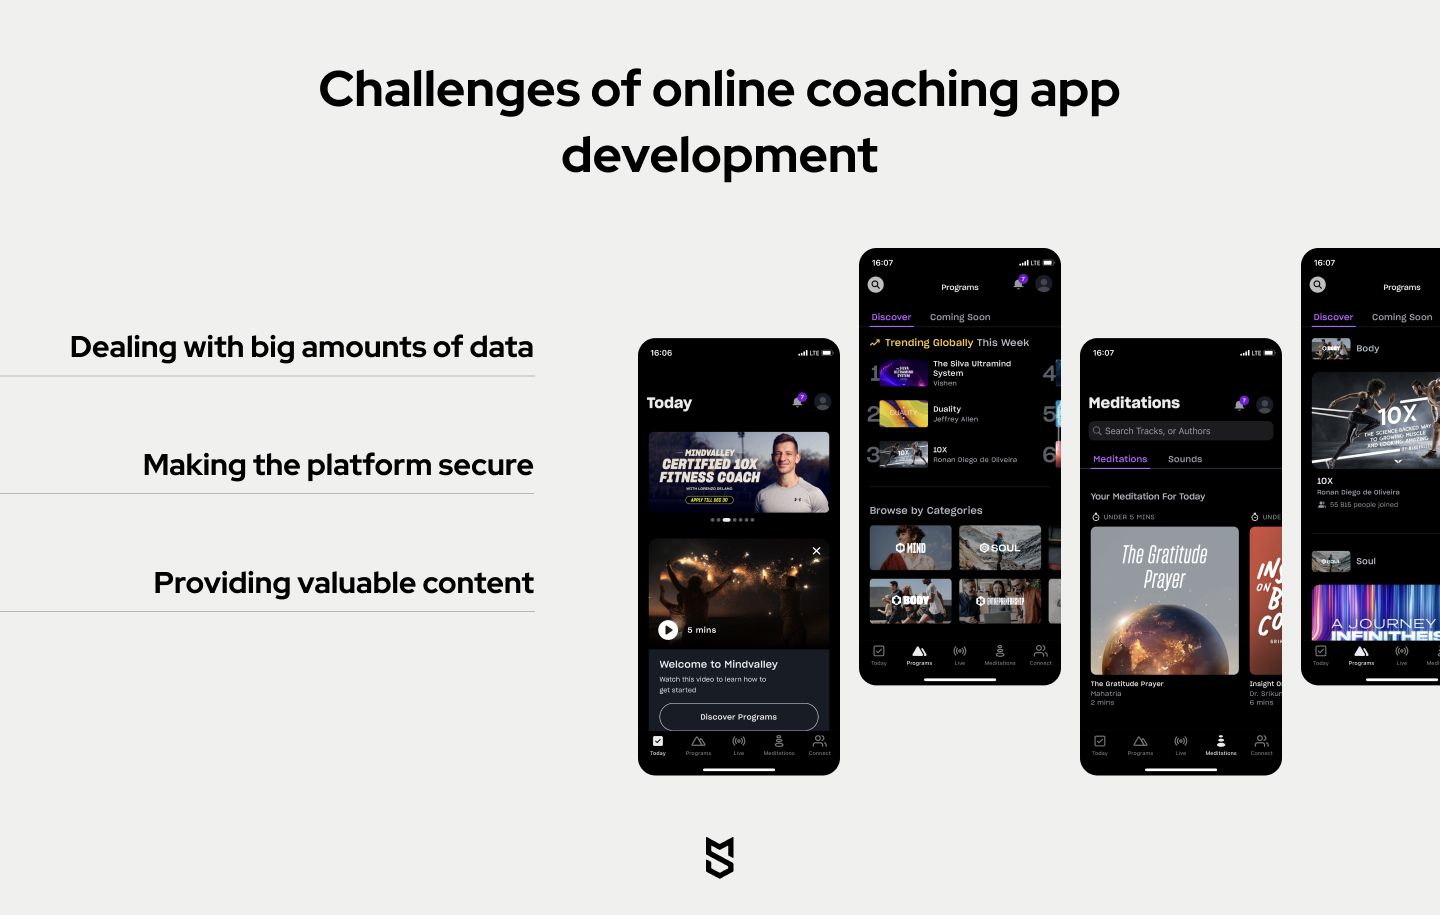 Challenges & solutions of online coach app development